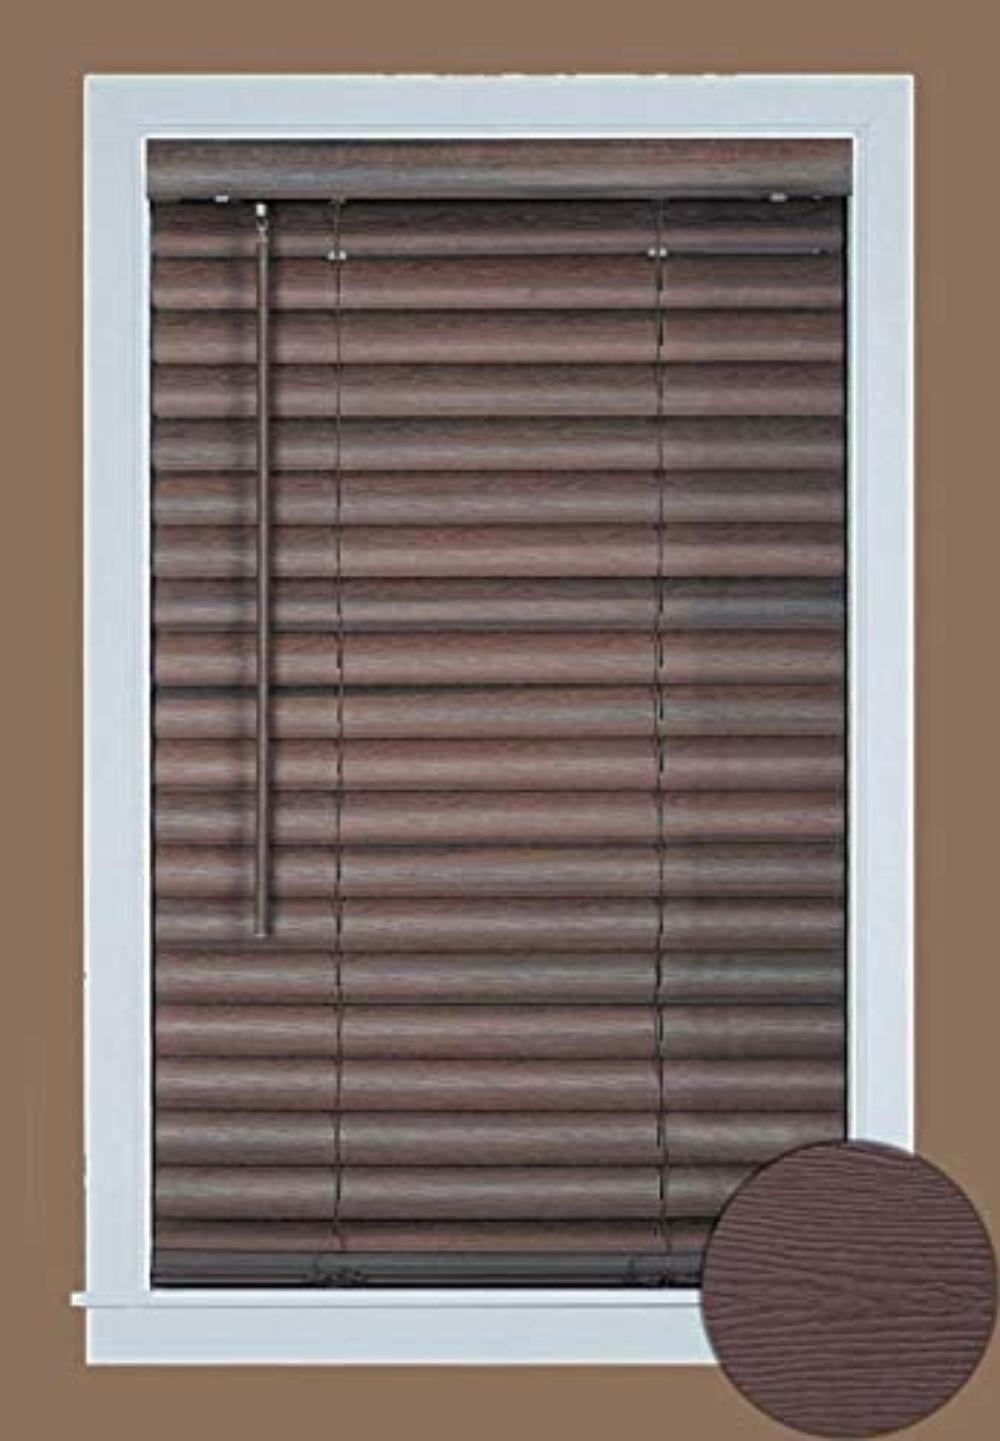 PowerSellerUSA Achim Home Furnishing Cordless GII Luna 2 Slat Mahogany Venetian Window Blinds 39 W x 64 L